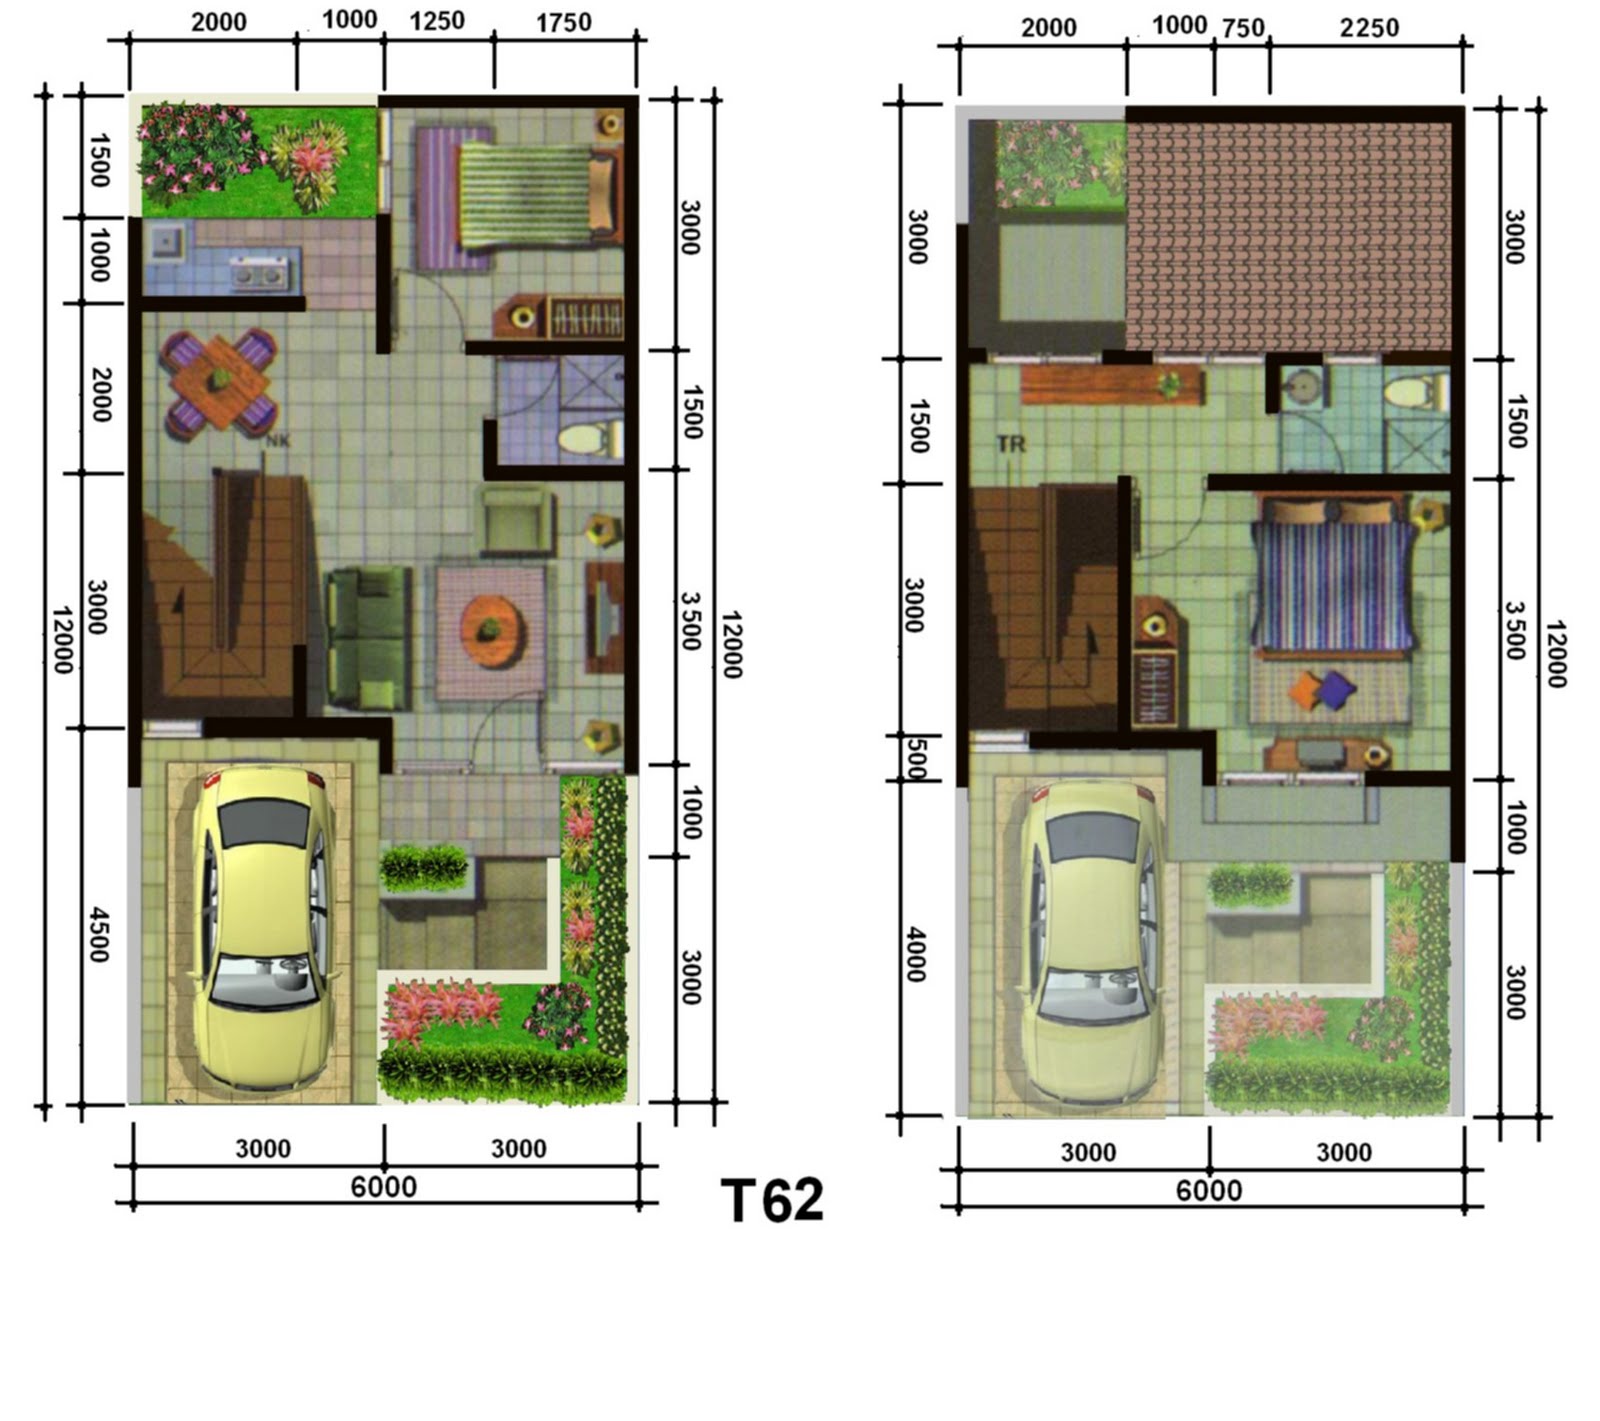 Desain Rumah Minimalis Sederhana Ukuran 7x12 Supplier Bata Ekspos